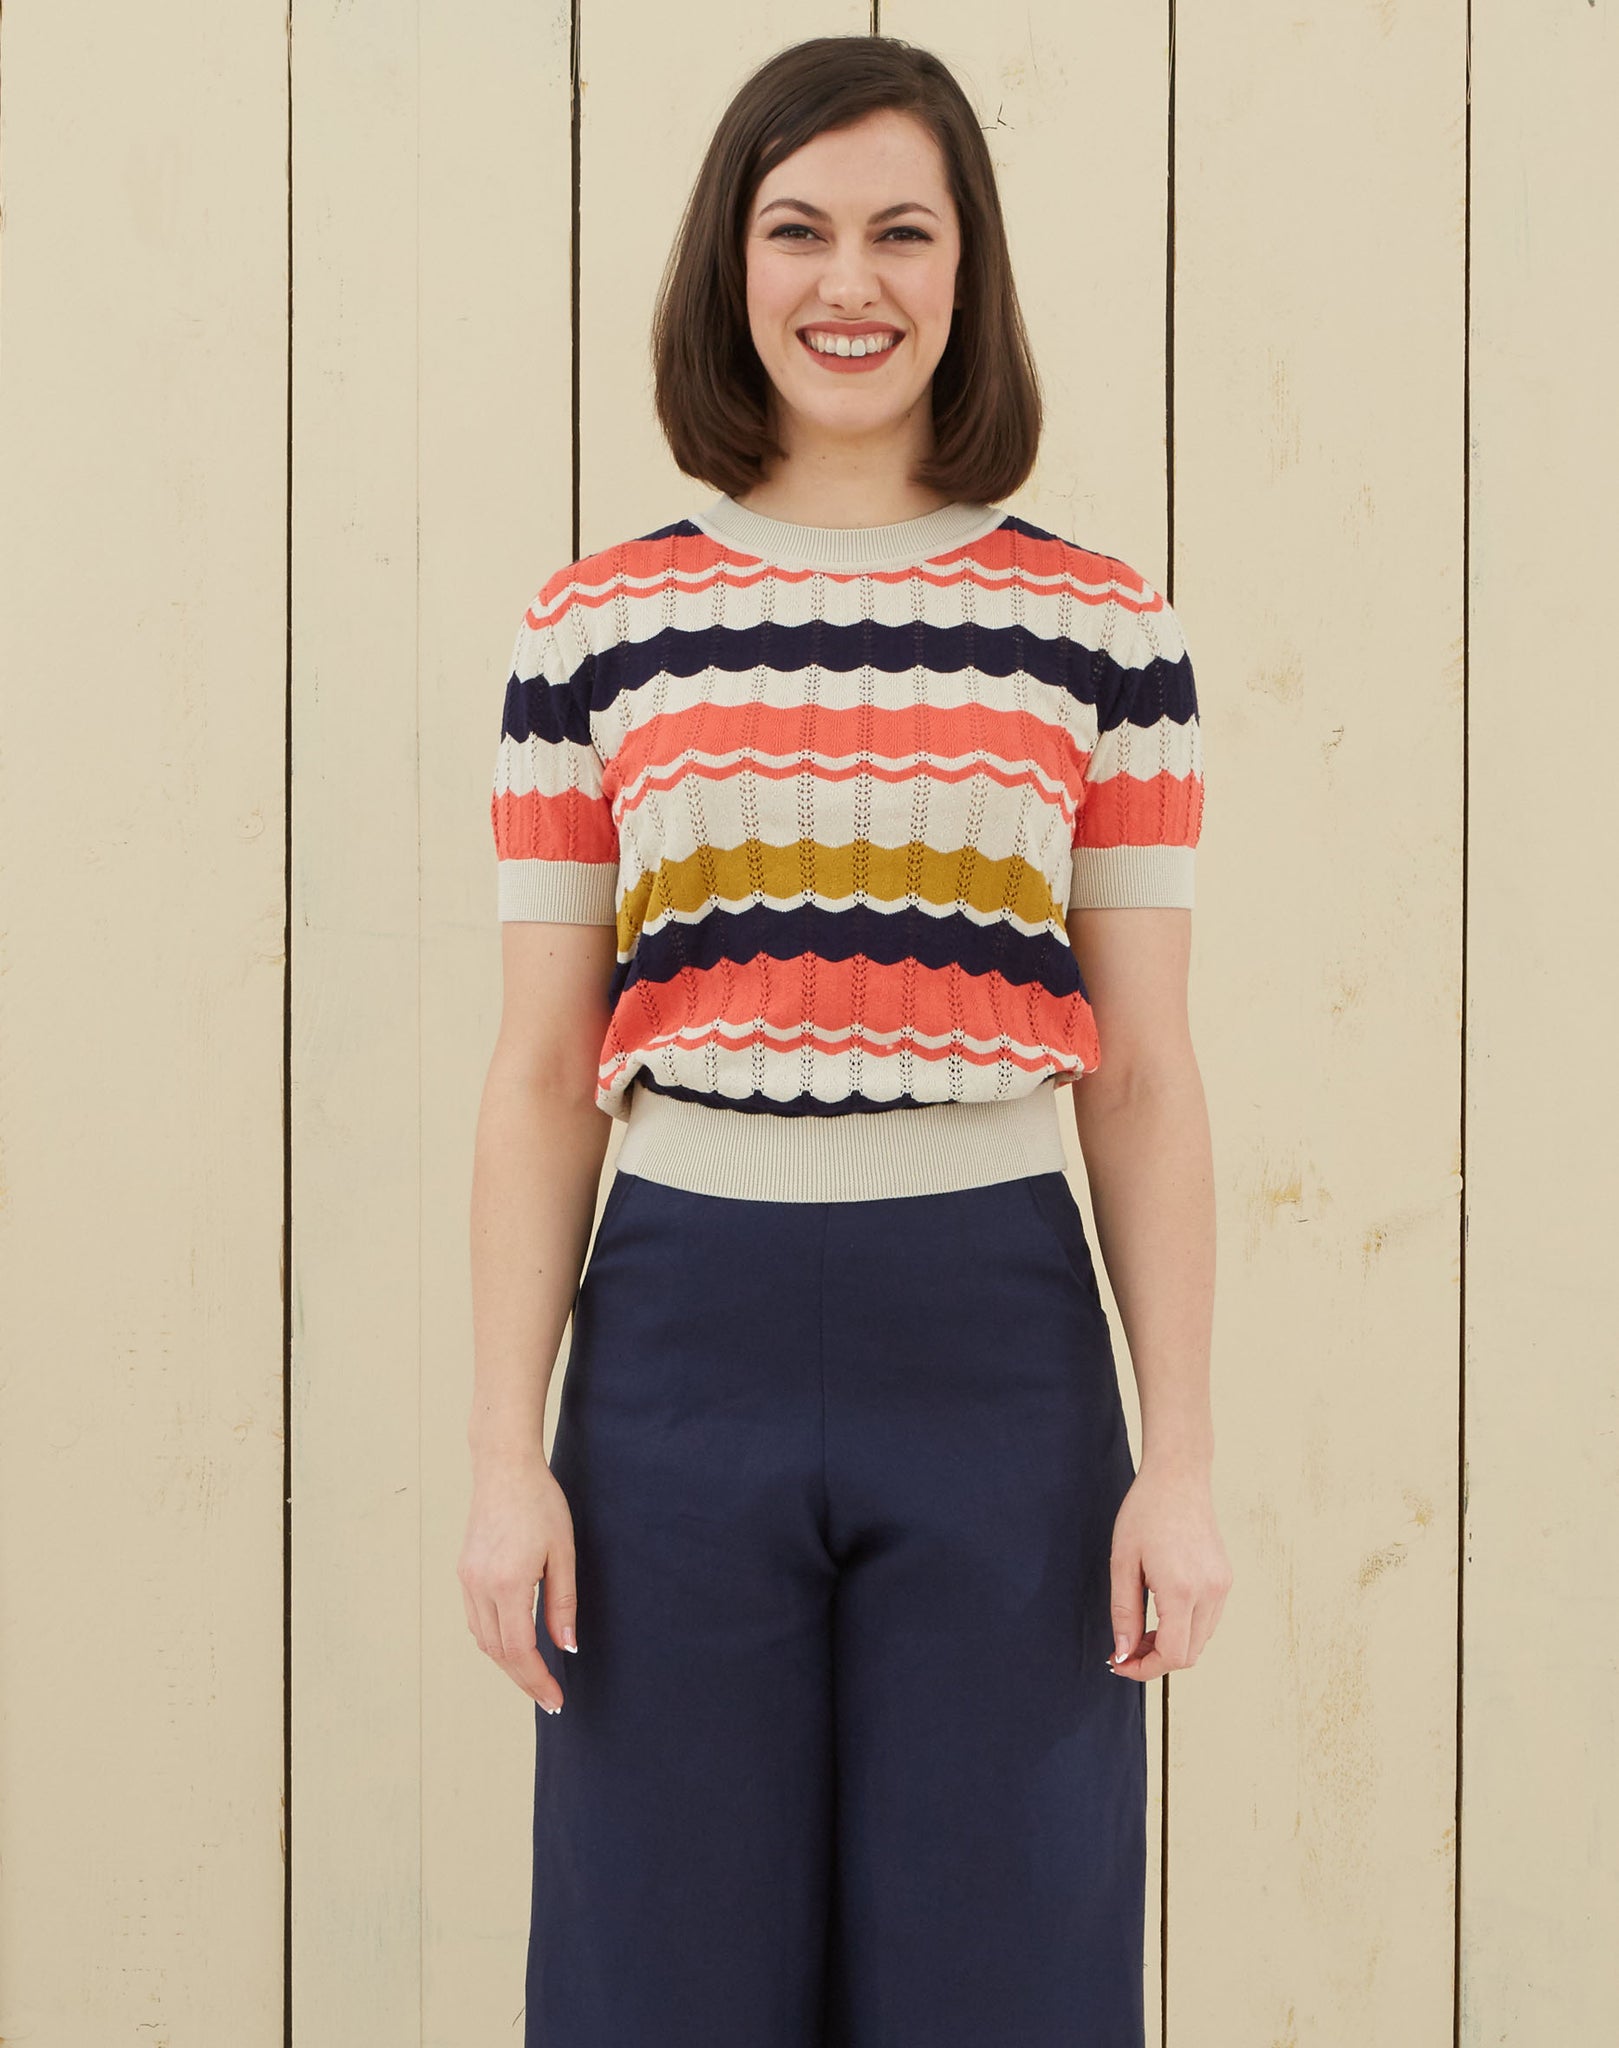 Durrells inspired knitwear Top | Navy, Coral, Mustard, Organic Cotton